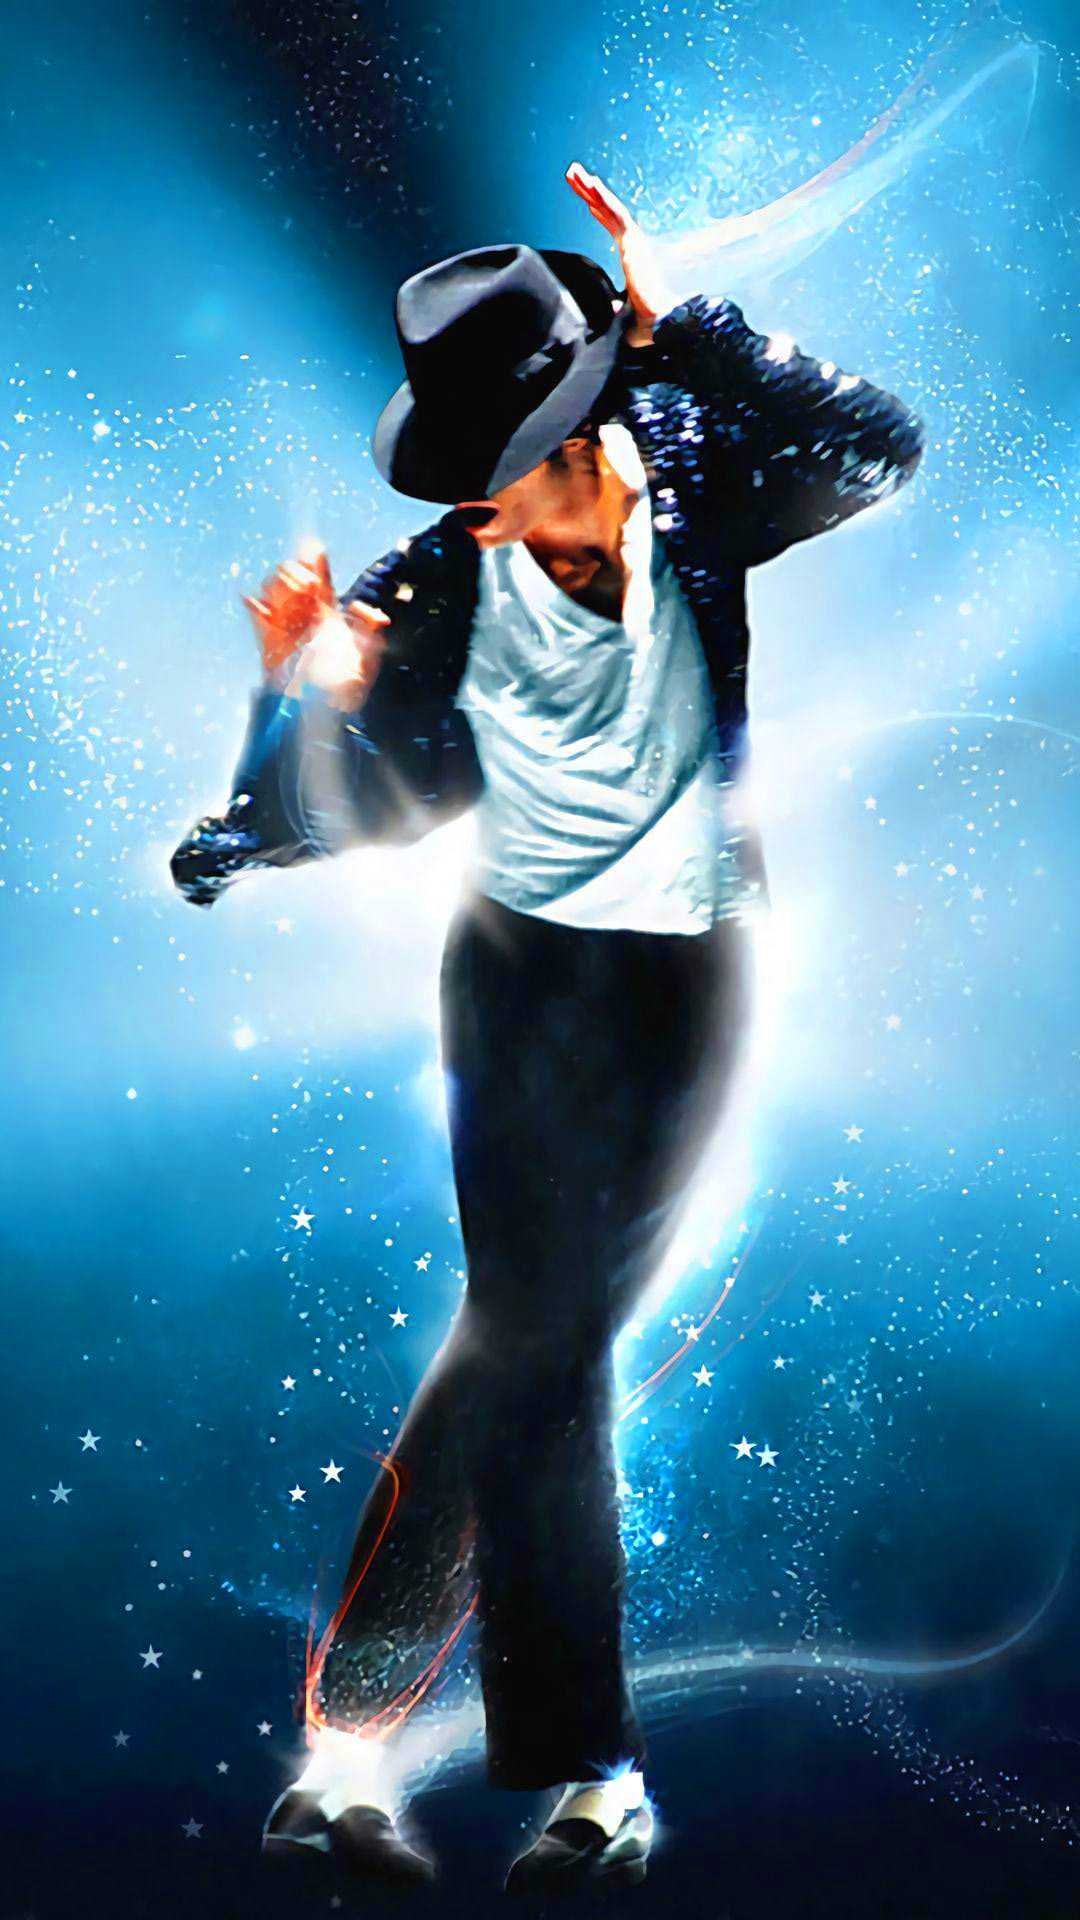 Michael Jackson American Singer Songwriter Wallpaper Download Mobcup